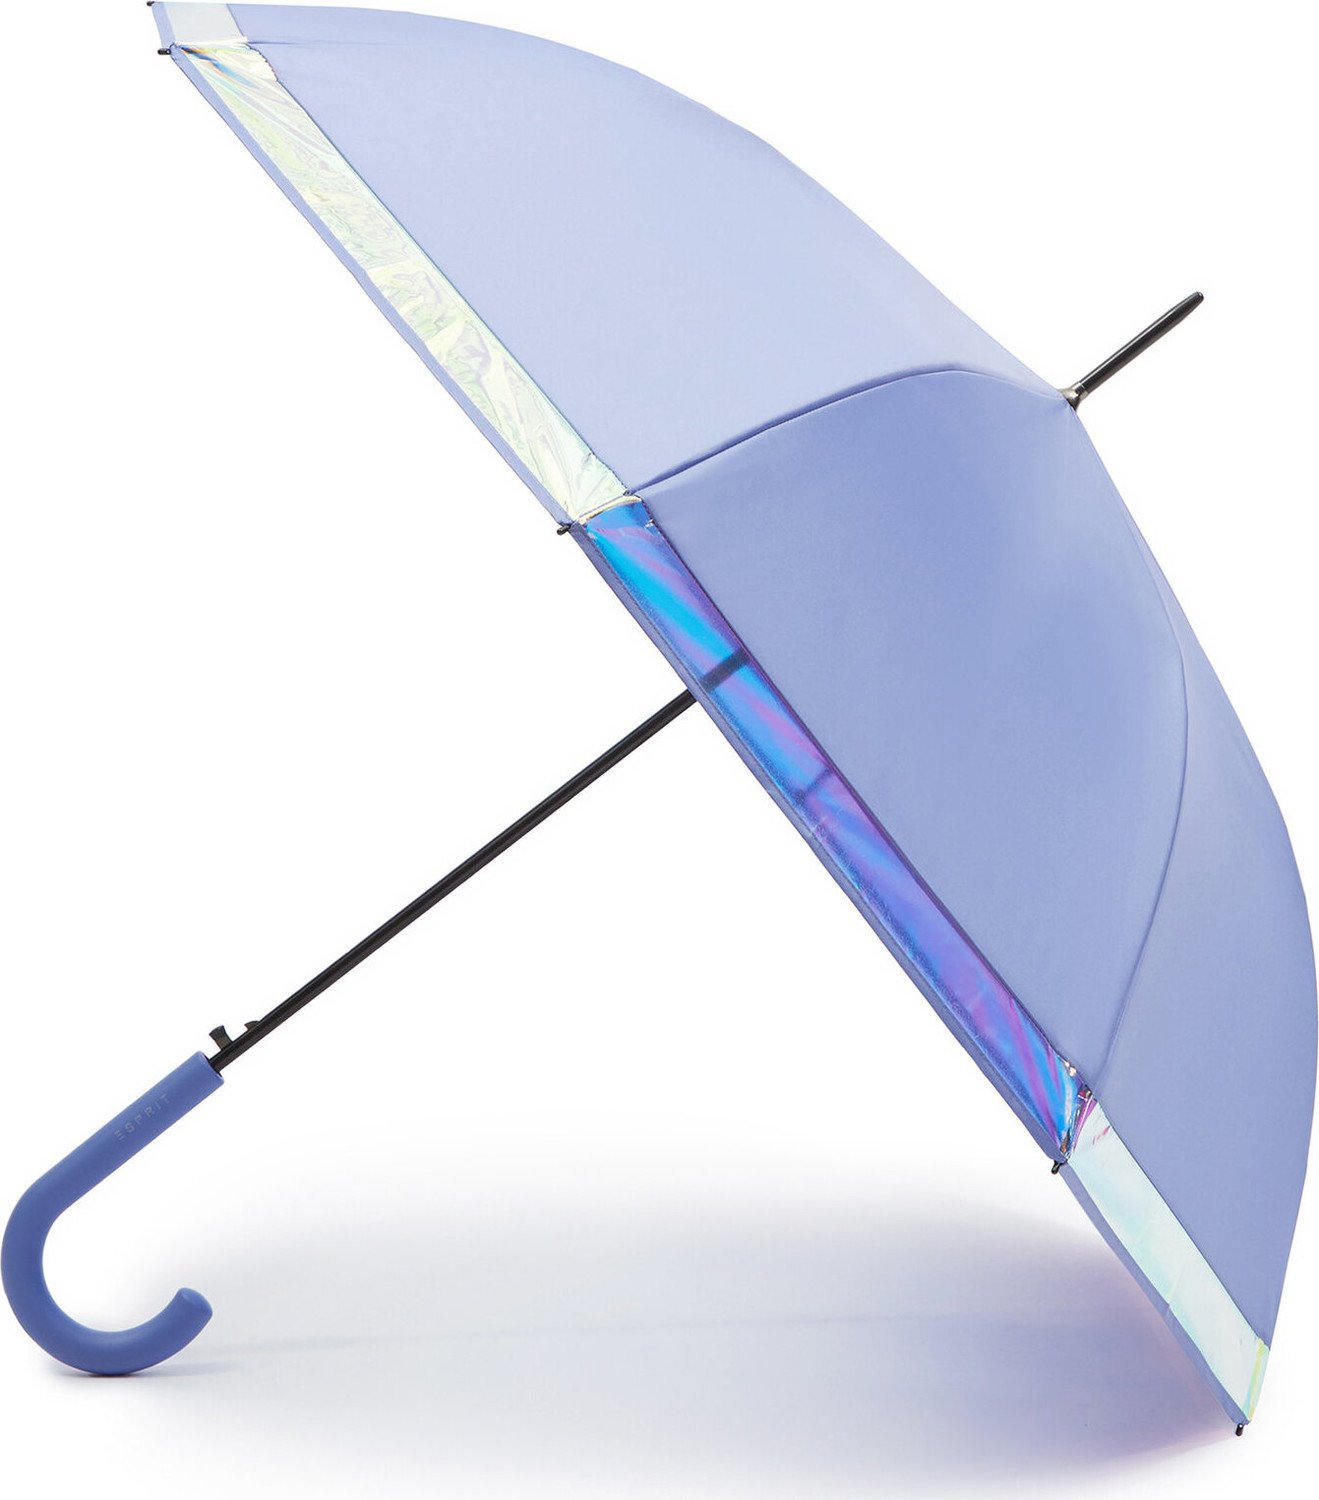 Deštník Esprit Long AC 58685 Shiny Border Lolite